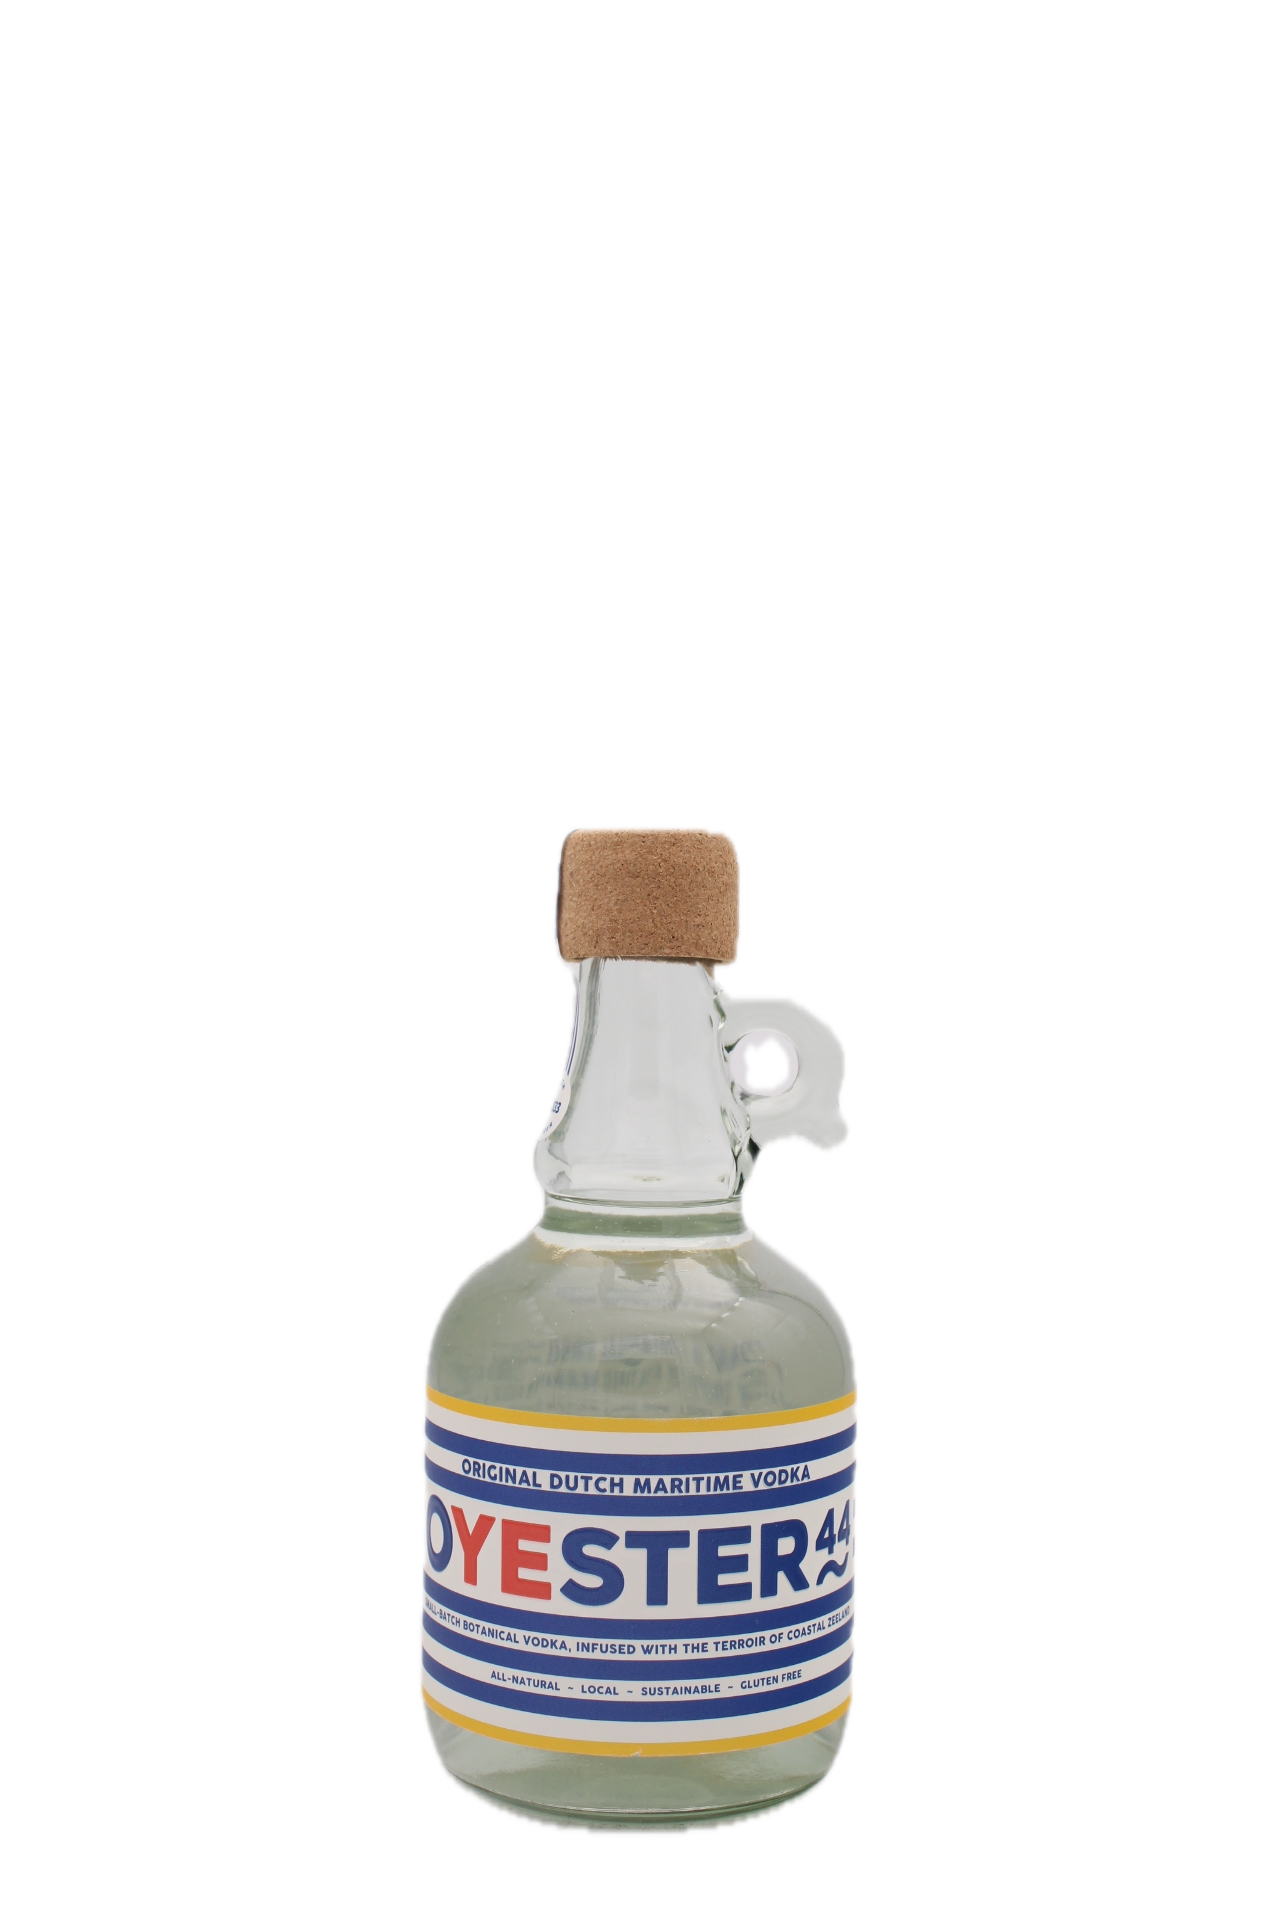 Oyester44 - Original Dutch Maritime Vodka